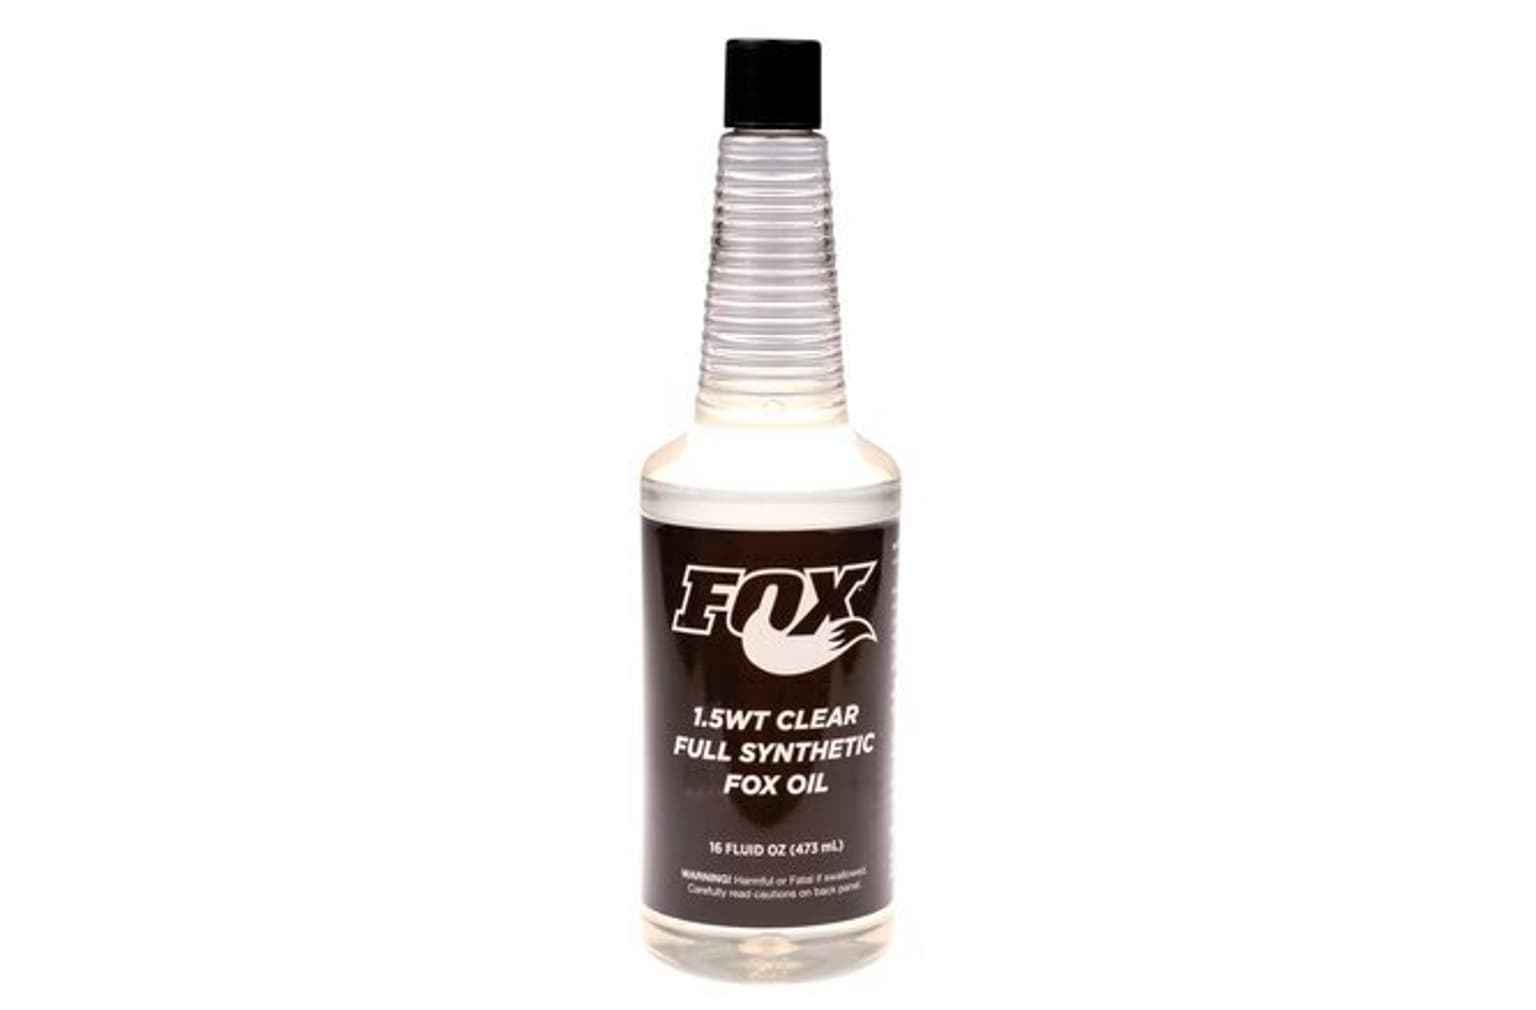 Fox Fox Olio AM 1,5wt sintetico 16oz. chiaro Lubrificanti 1